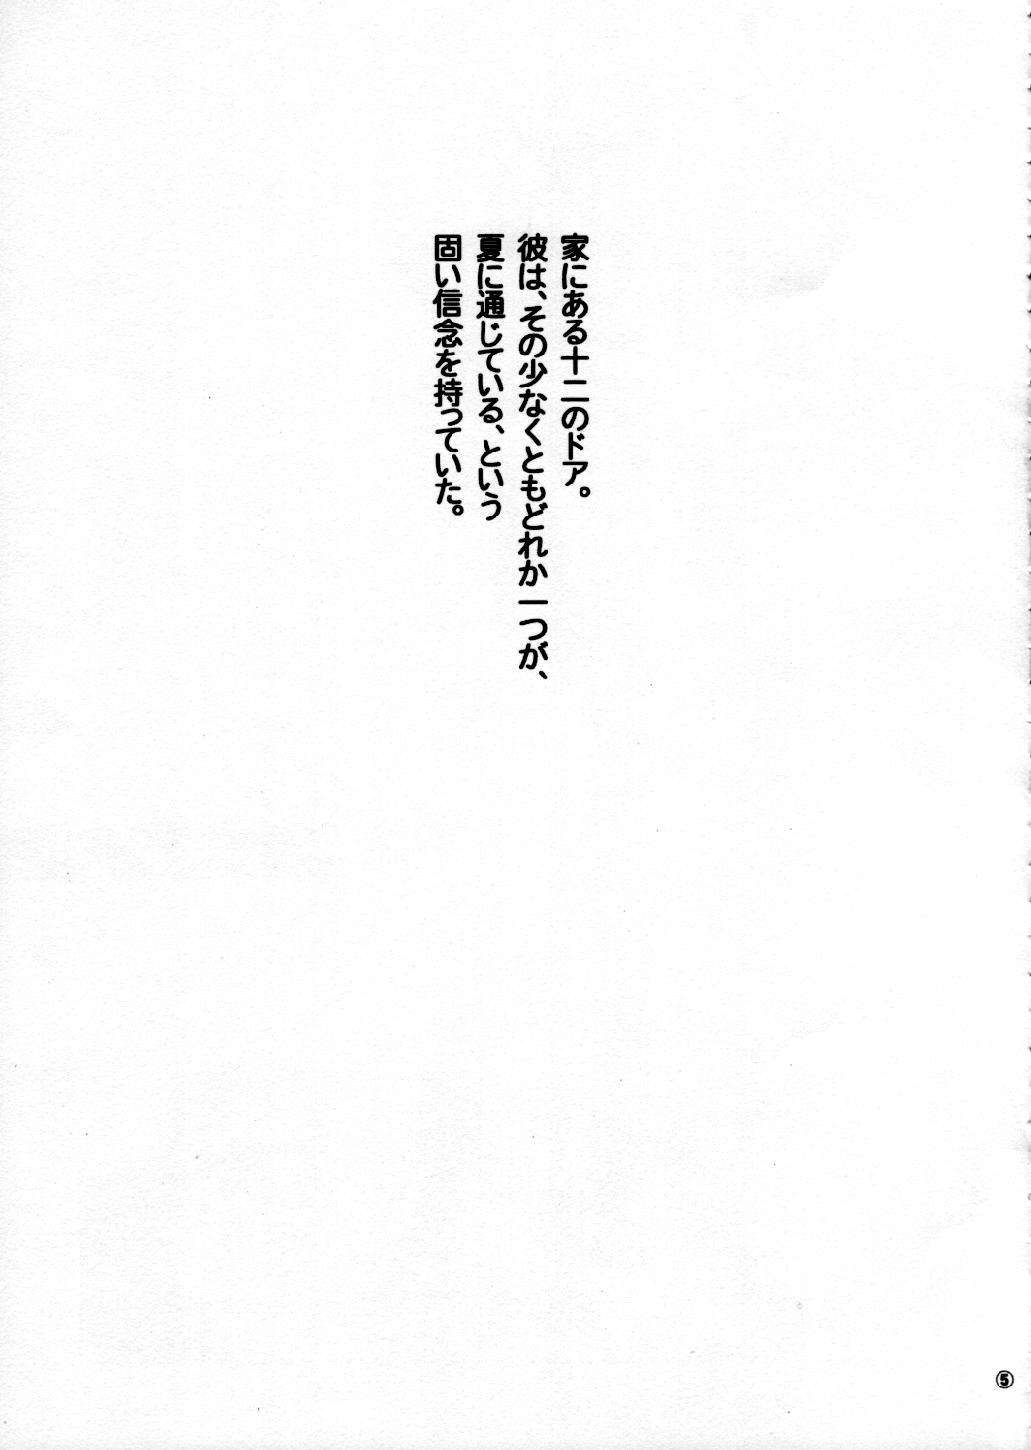 Nudes Kanaka no Sekai - THE WORLD OF KANAKA - Narue no sekai Naked Sex - Page 4